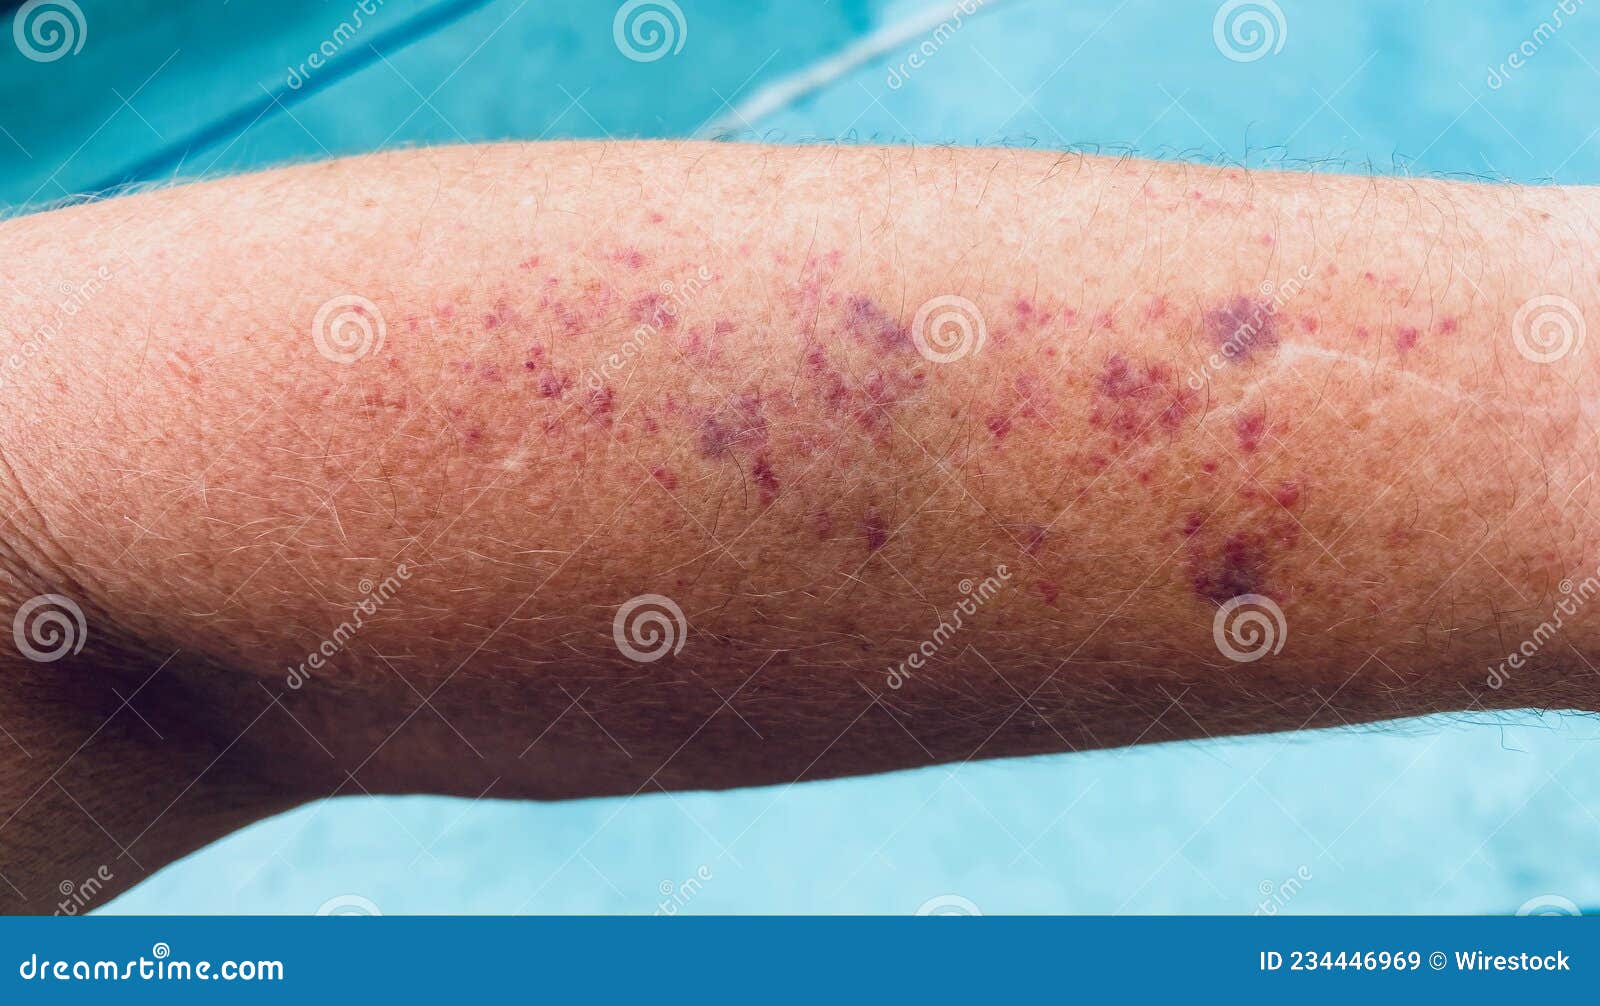 discolored spots of senile purpura, aging skin